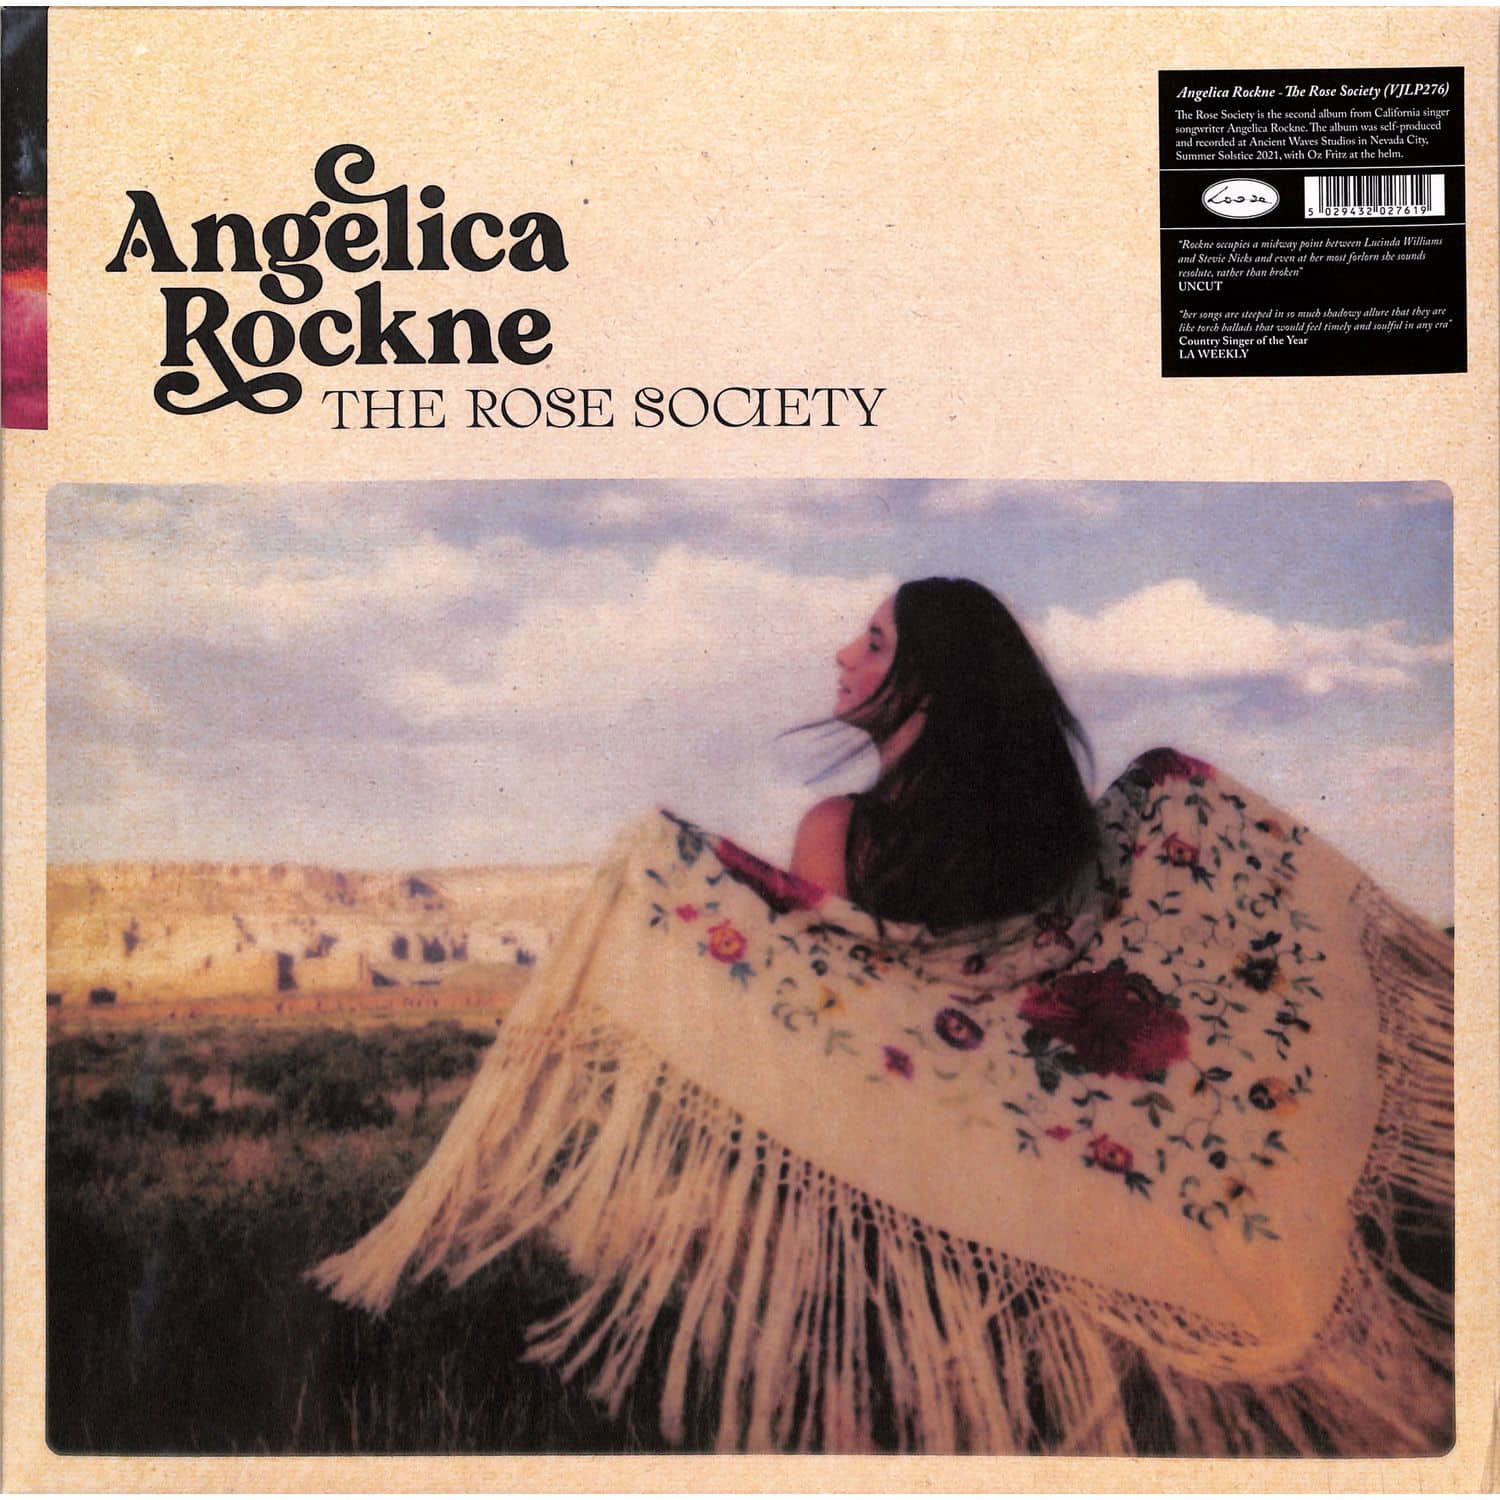  Angelica Rockne - THE ROSE SOCIETY 